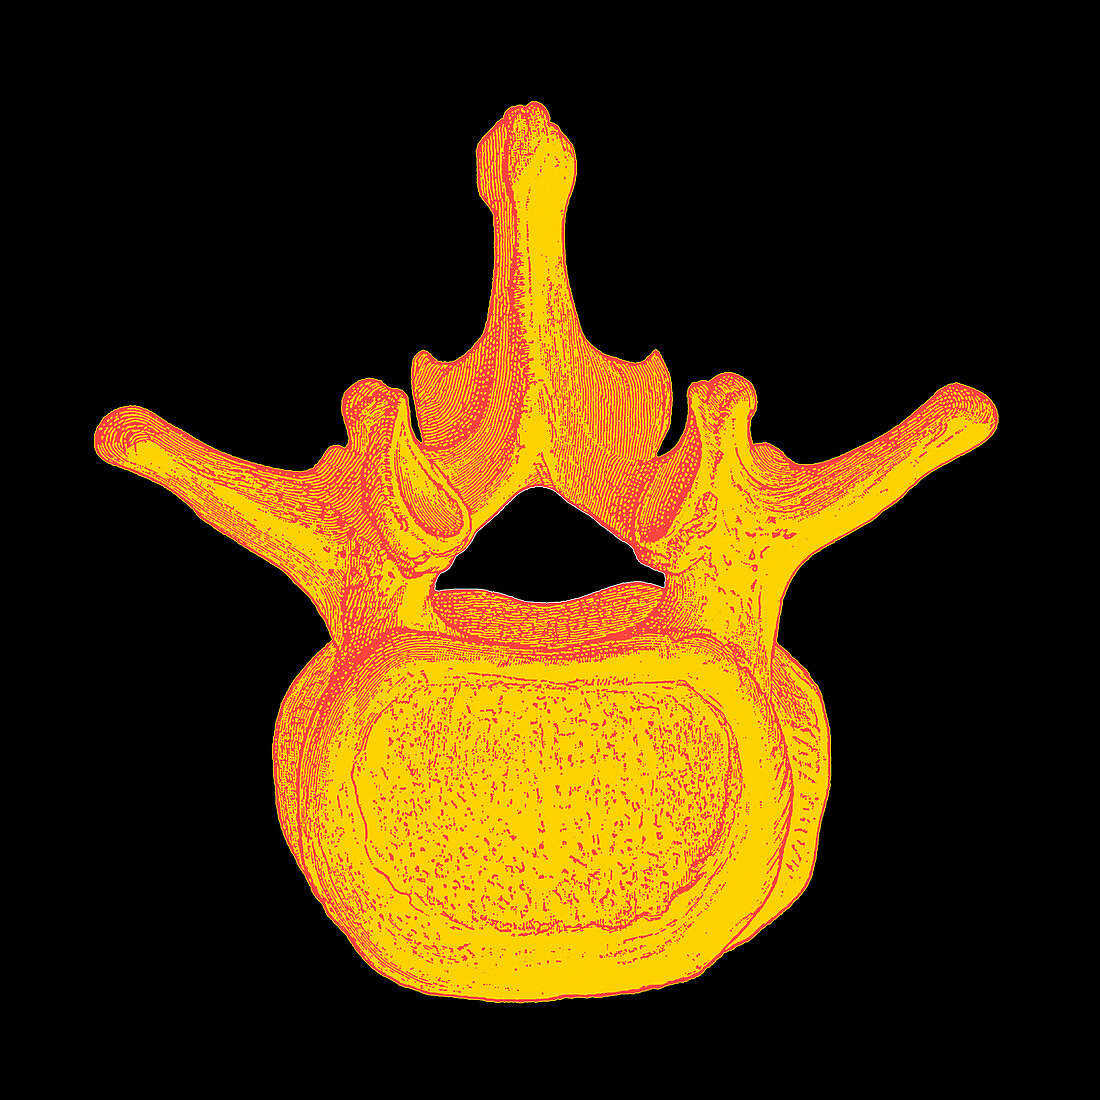 Spinal vertebra